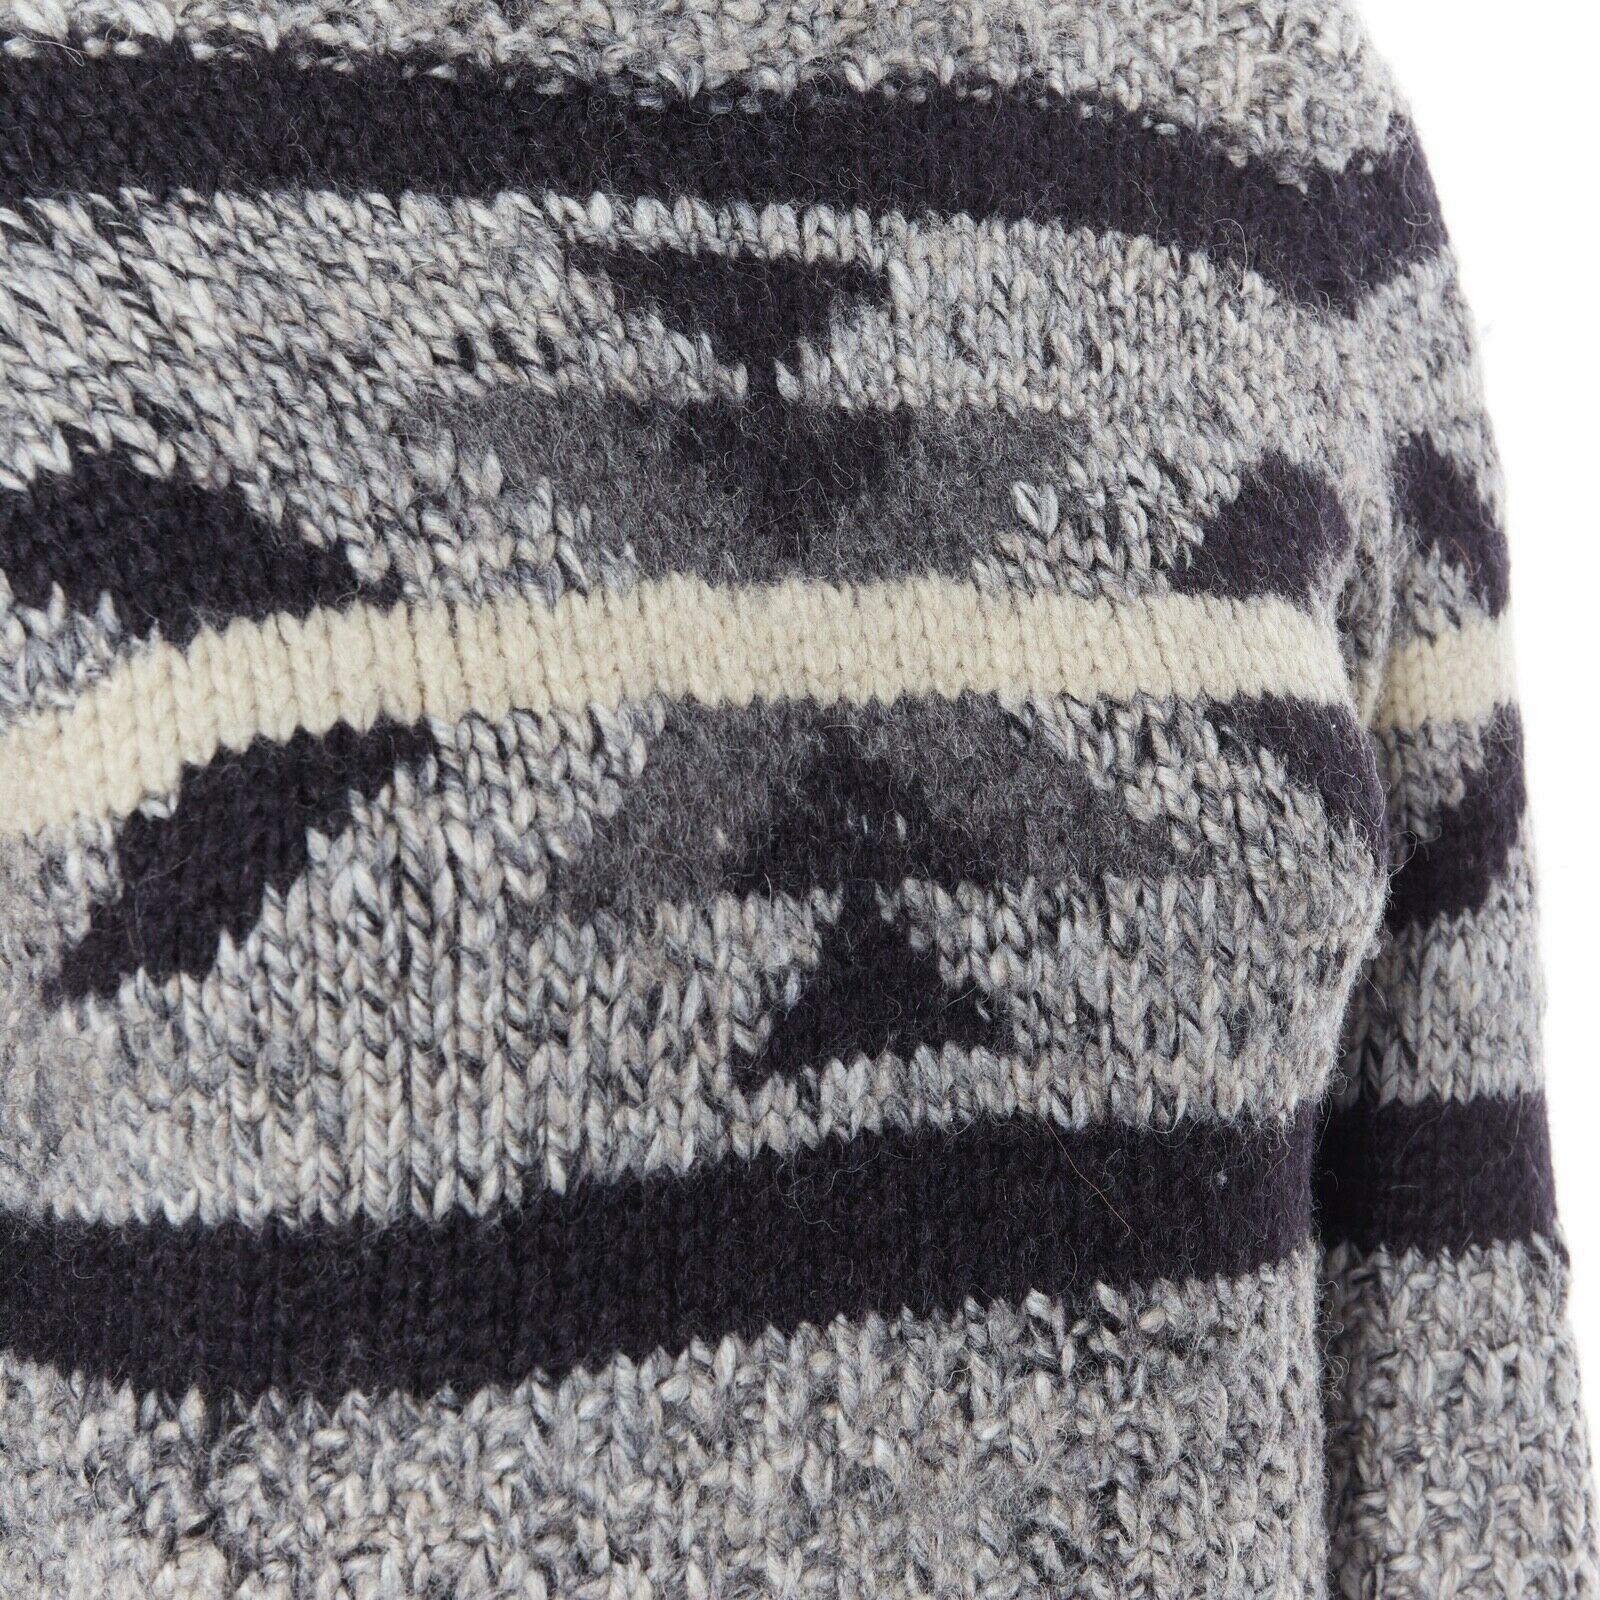 ISABEL MARANT ETOILE grey wool blend knit ski pullover sweater jumper FR36 S 2